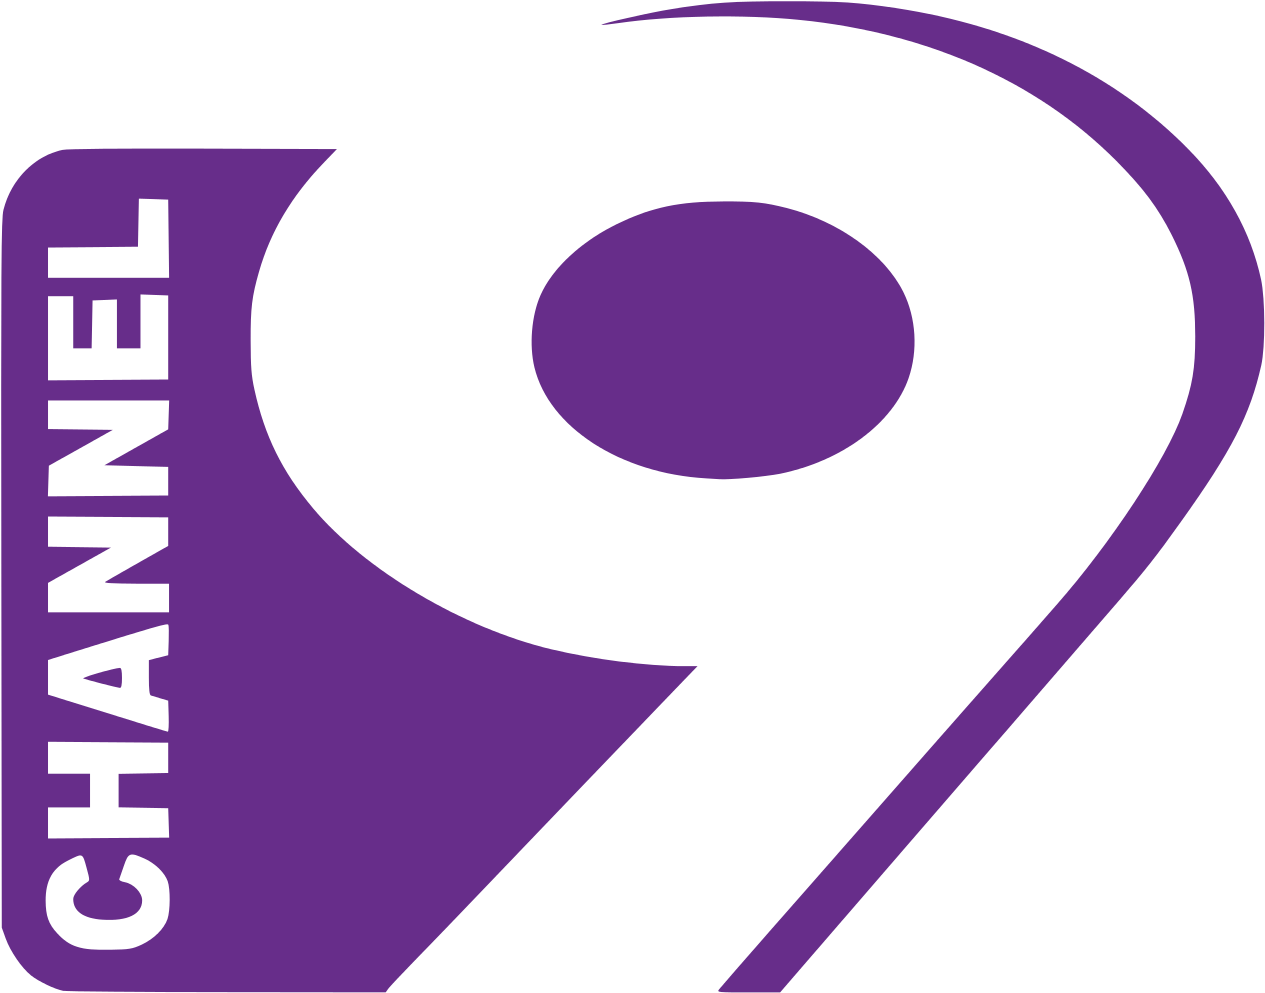 Channel 9 Bangladesh Logo (1280x1006)